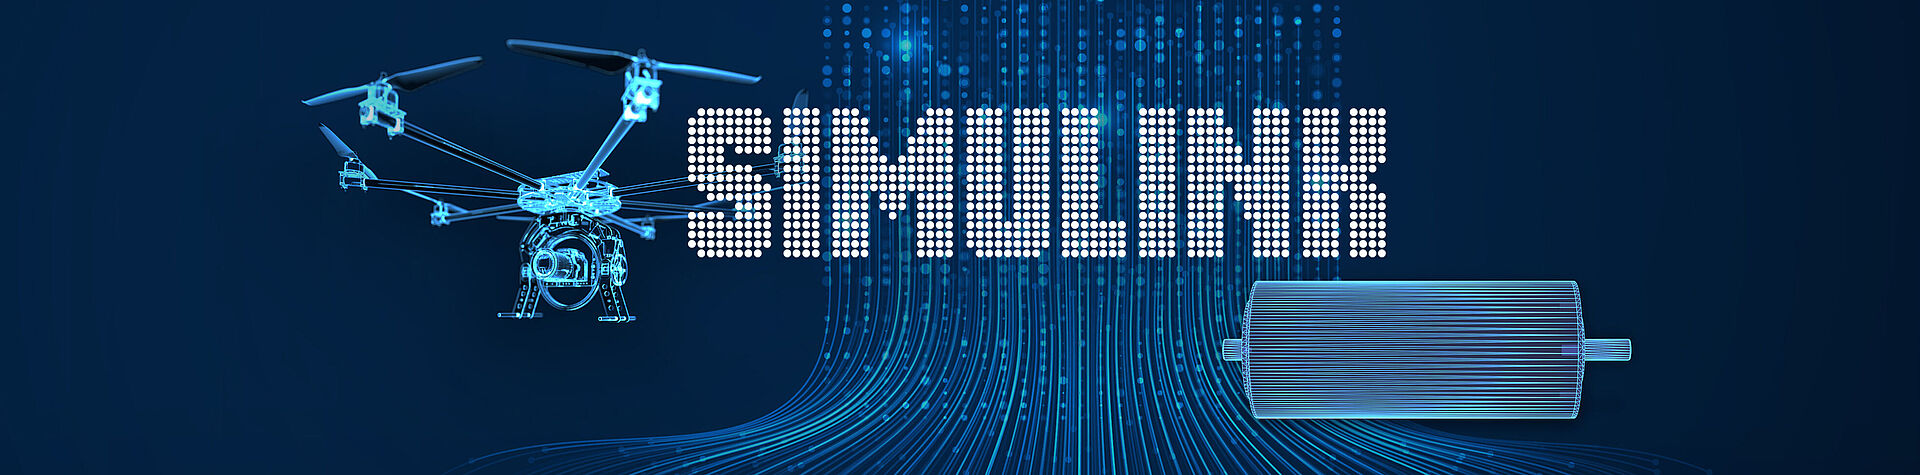 Webinaire bibliothèque de programmation SIMULINK - Slider